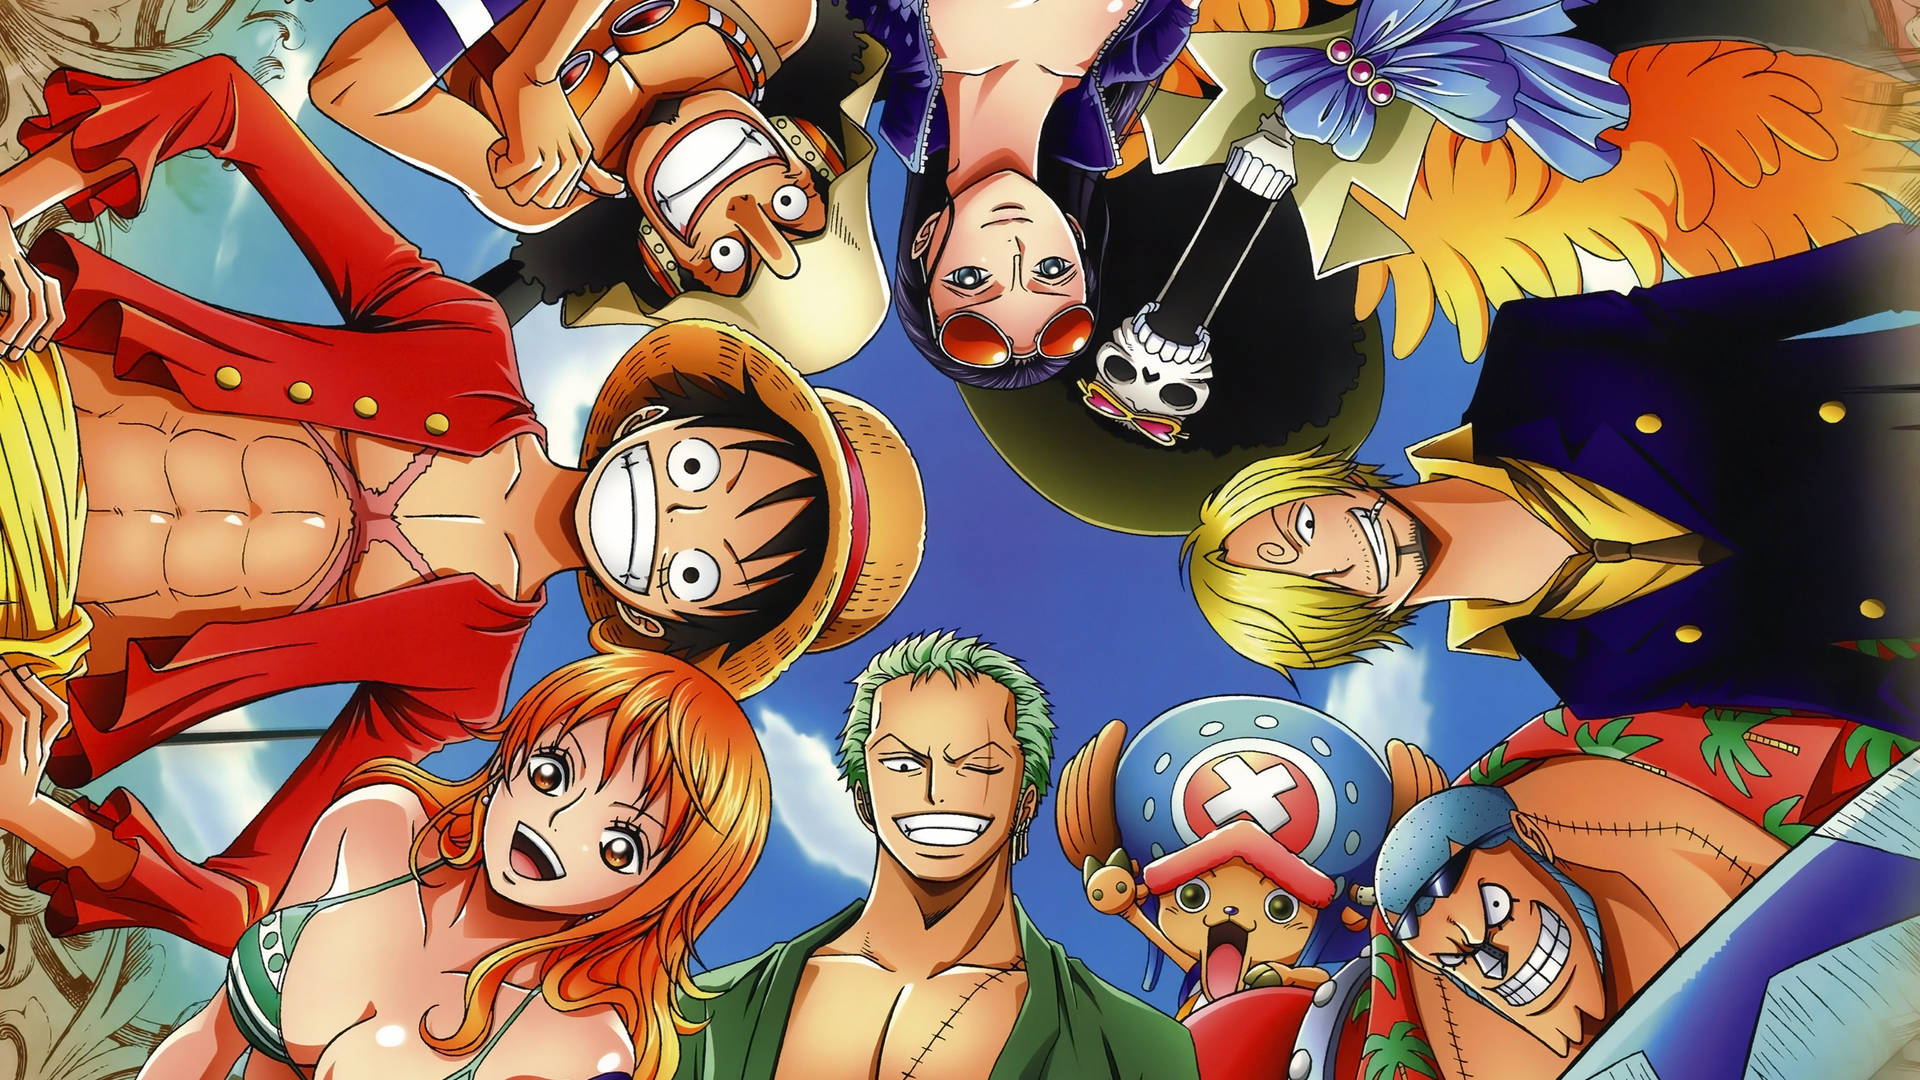 Free One Piece Desktop Wallpaper Downloads, [100+] One Piece Desktop  Wallpapers for FREE 